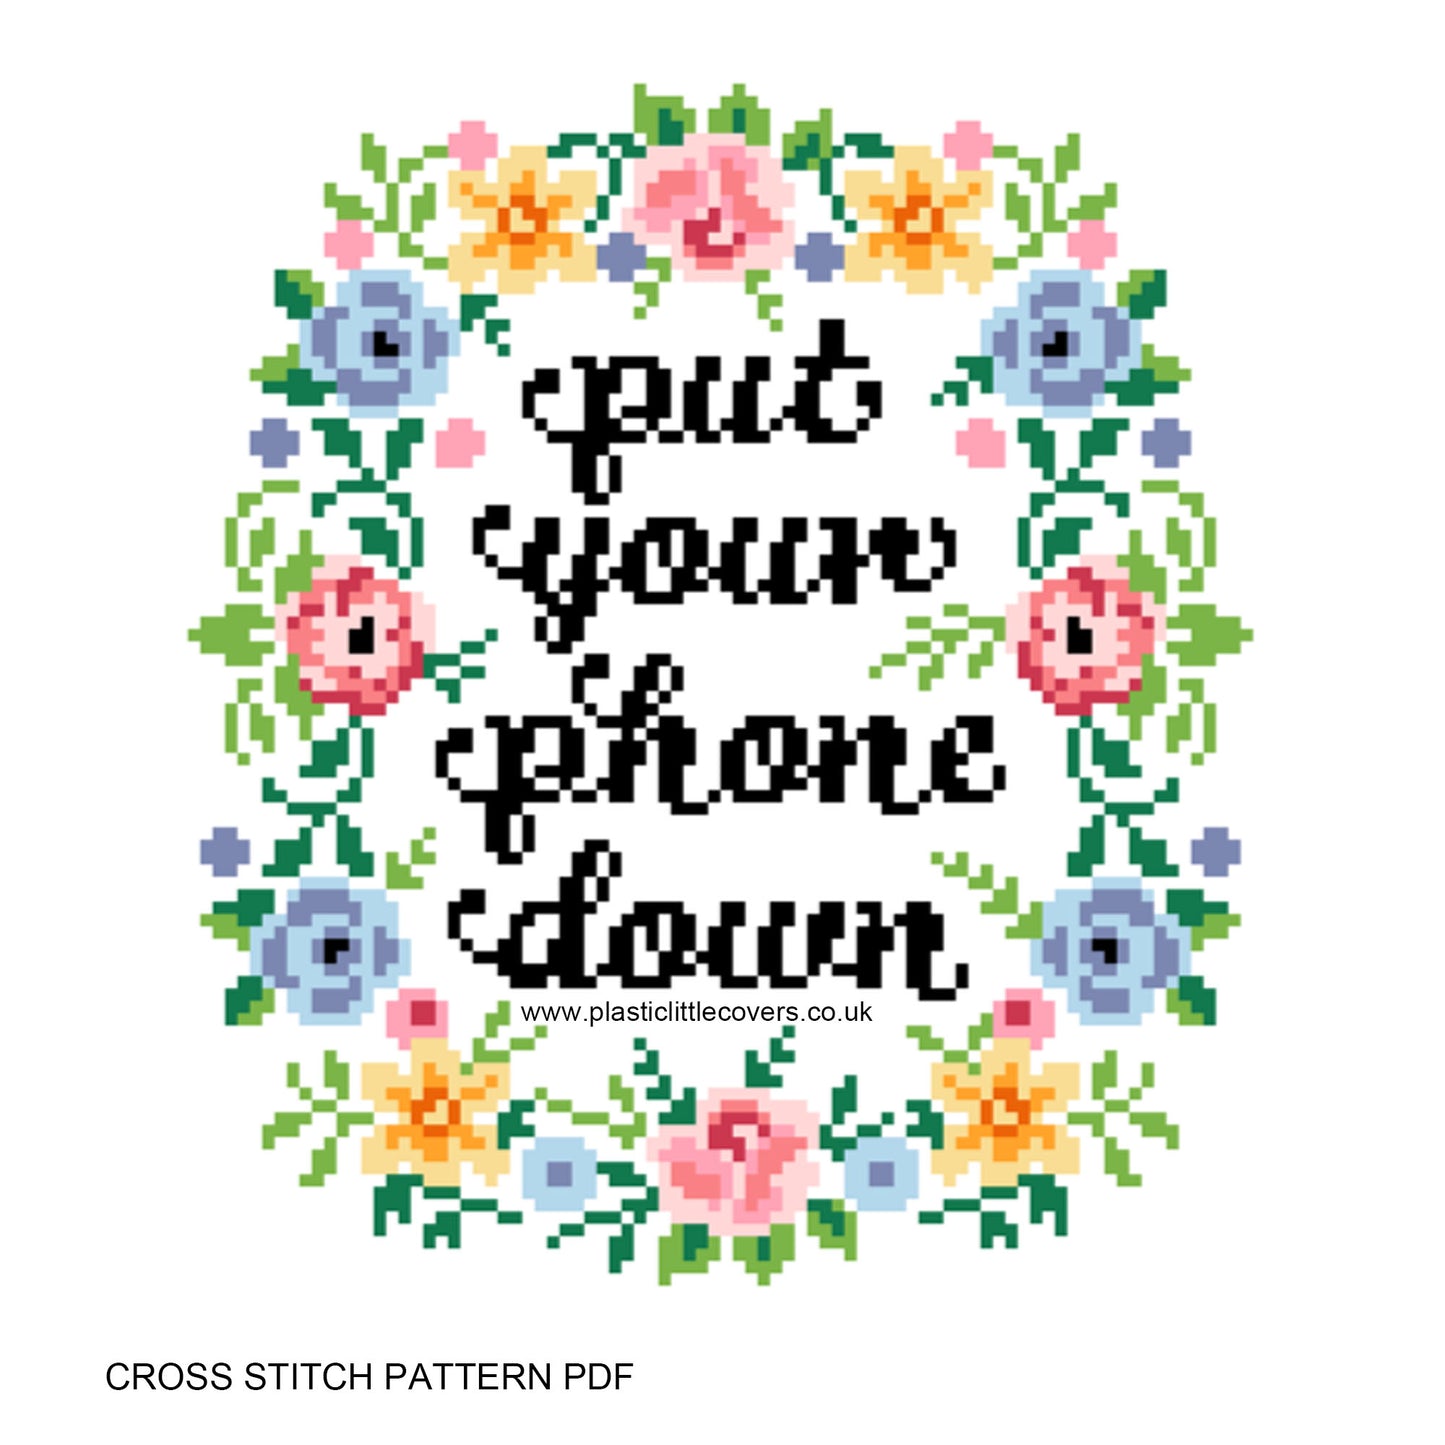 Put Your Phone Down - Cross Stitch Pattern PDF.